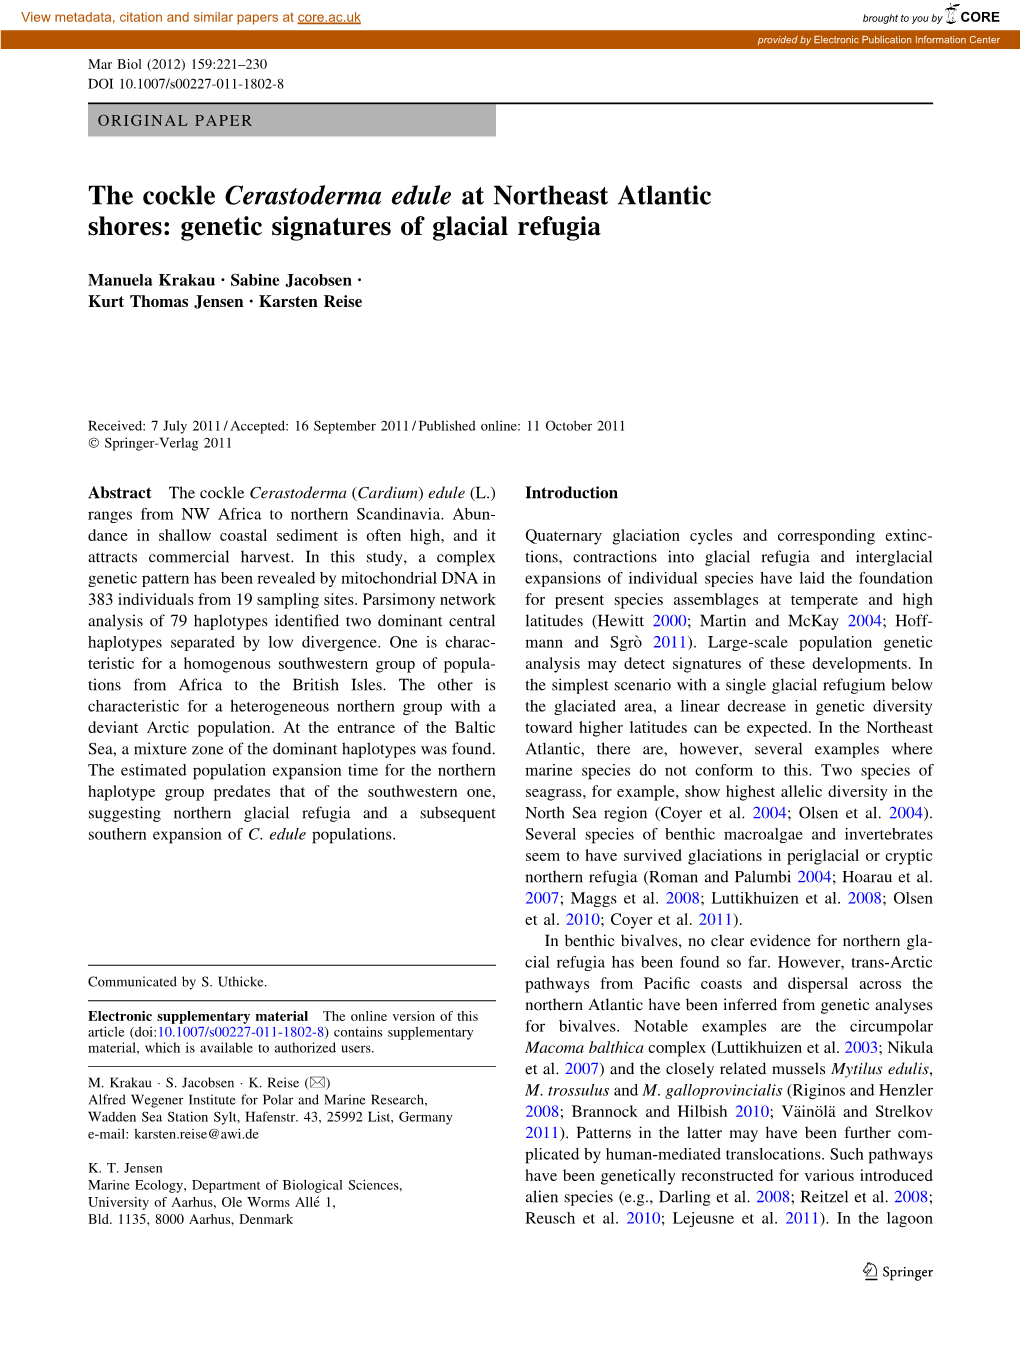 The Cockle Cerastoderma Edule at Northeast Atlantic Shores: Genetic Signatures of Glacial Refugia